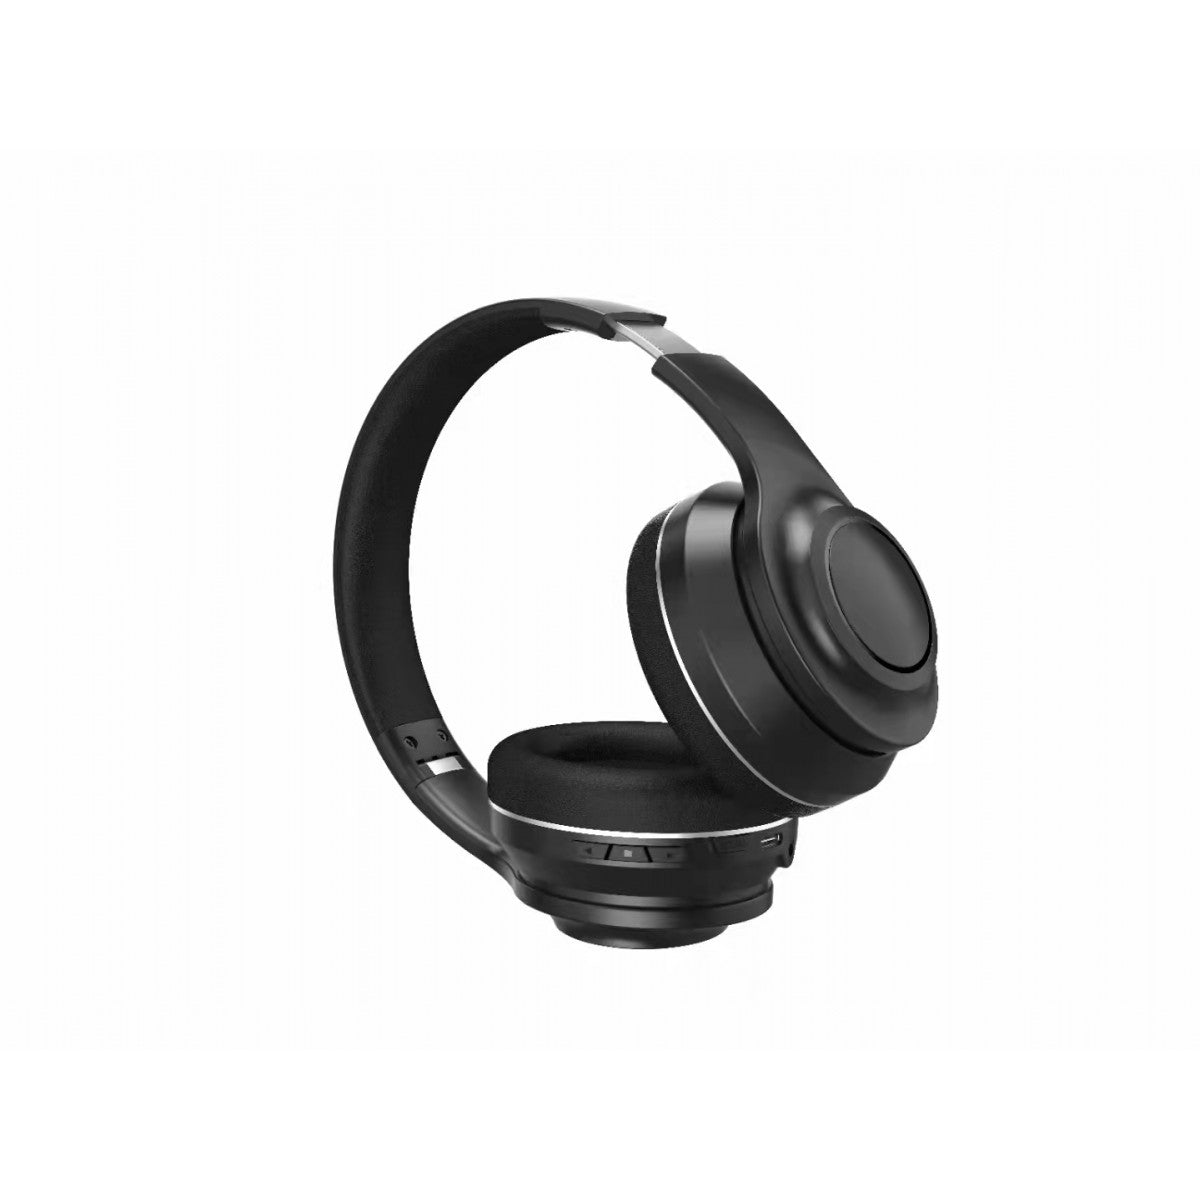 Bluetooth Ασύρματα Ακουστικά ANC 700 Over Ear ακύρωσης θορύβου - ΑΚΟΥΣΤΙΚΑANC®The GrBazaar of Brands